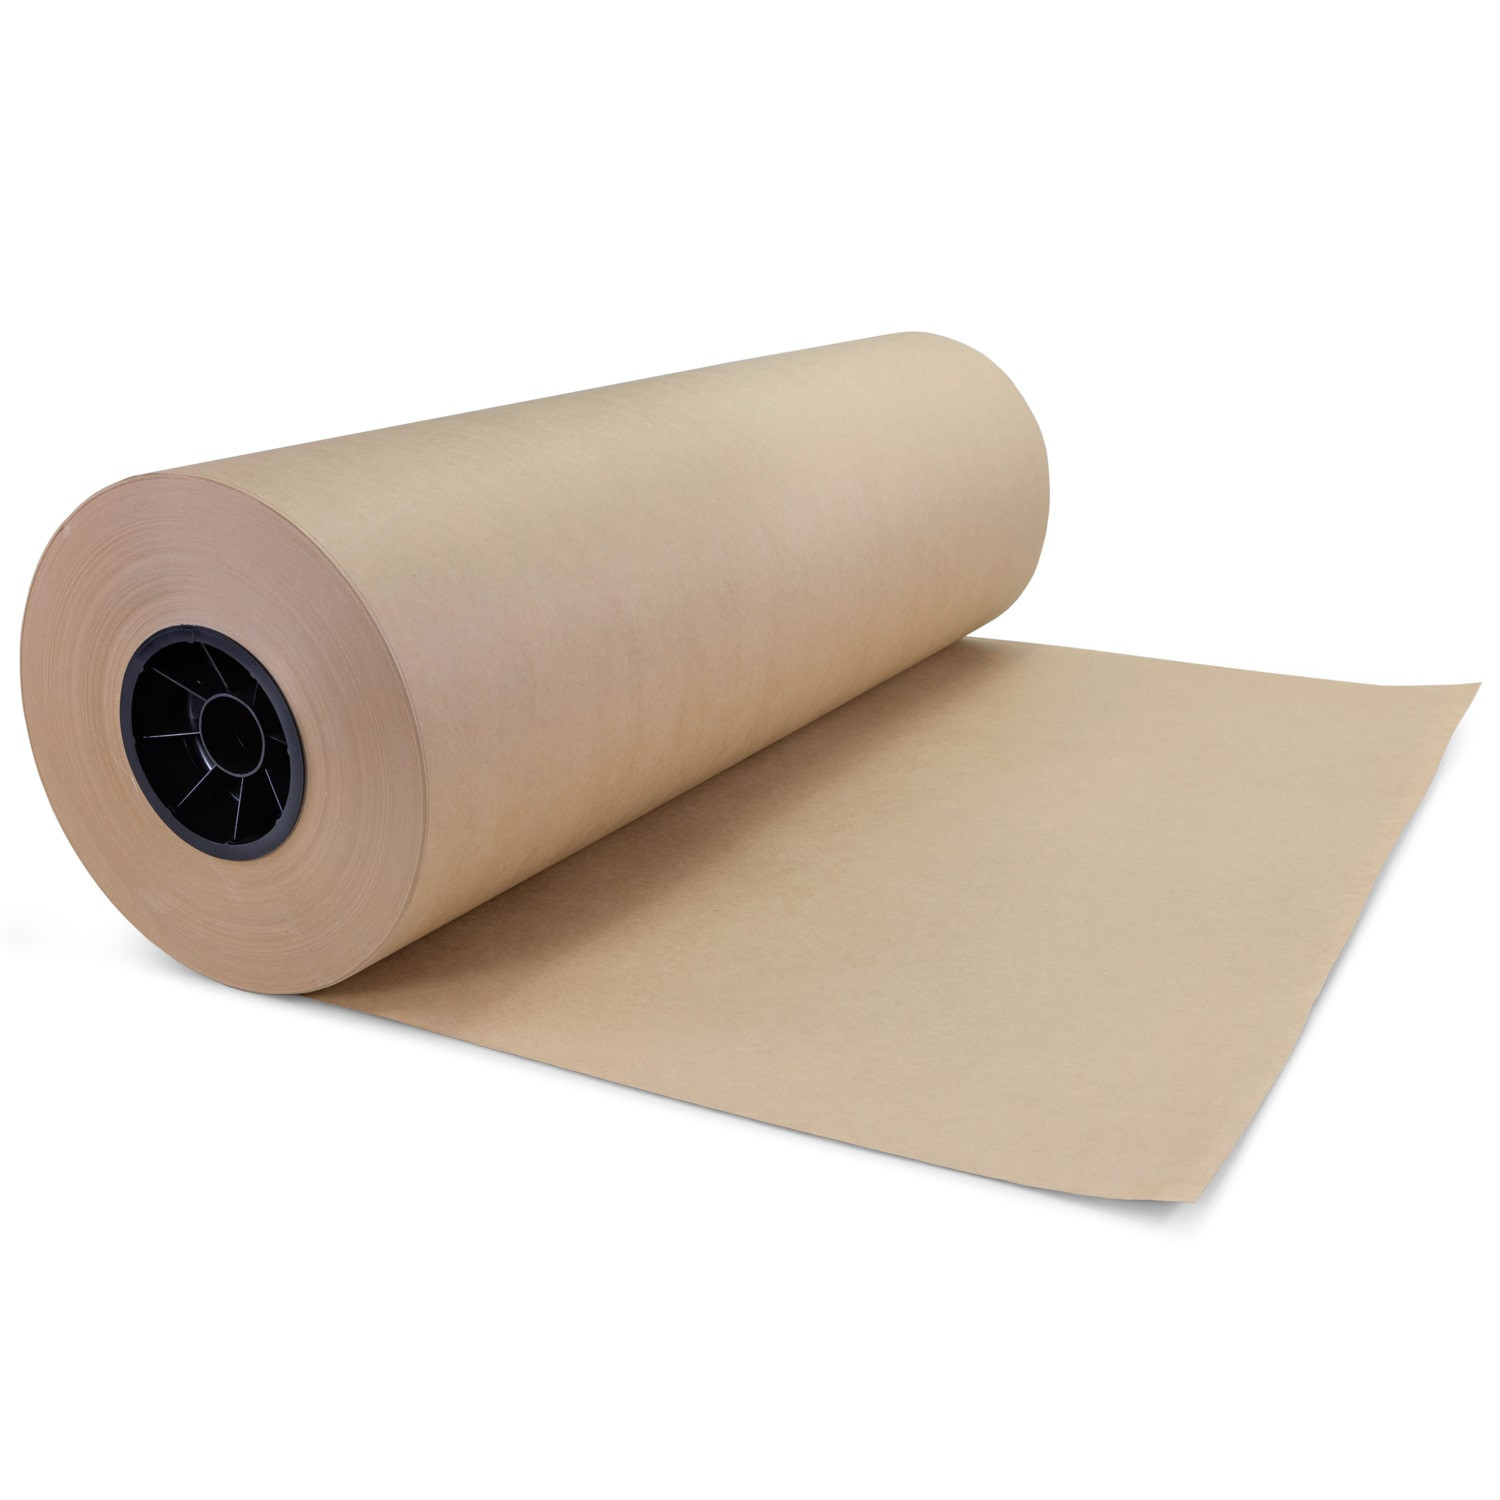 24 x 720' Brown Kraft Paper Roll, 50 lbs buy in stock in U.S. in